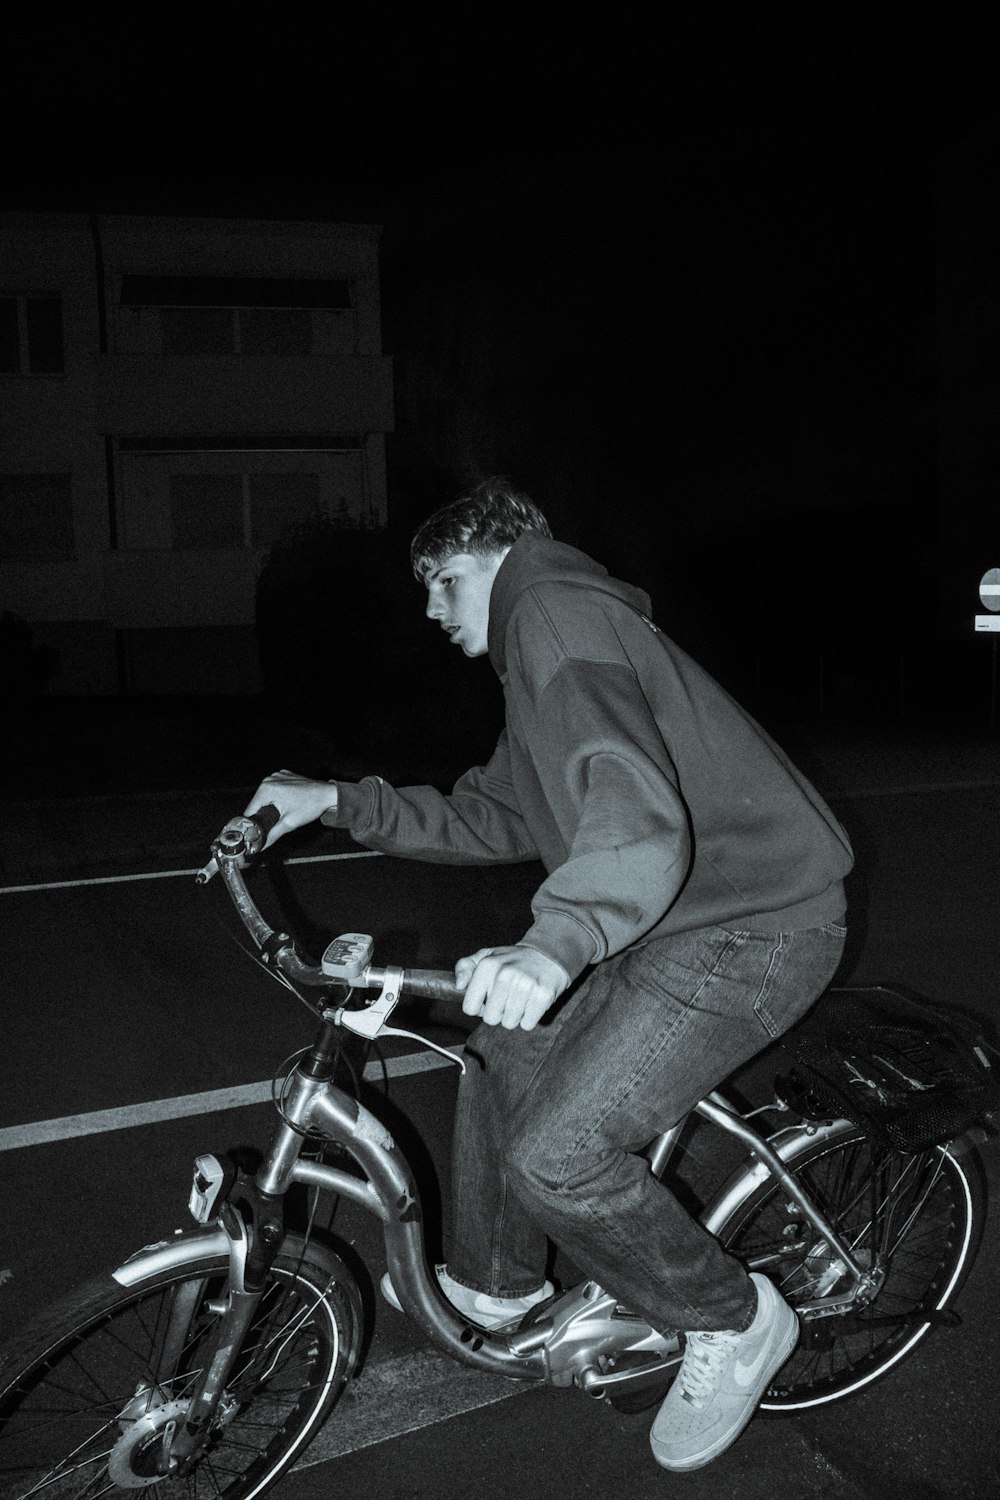 a man riding a bike down a street at night